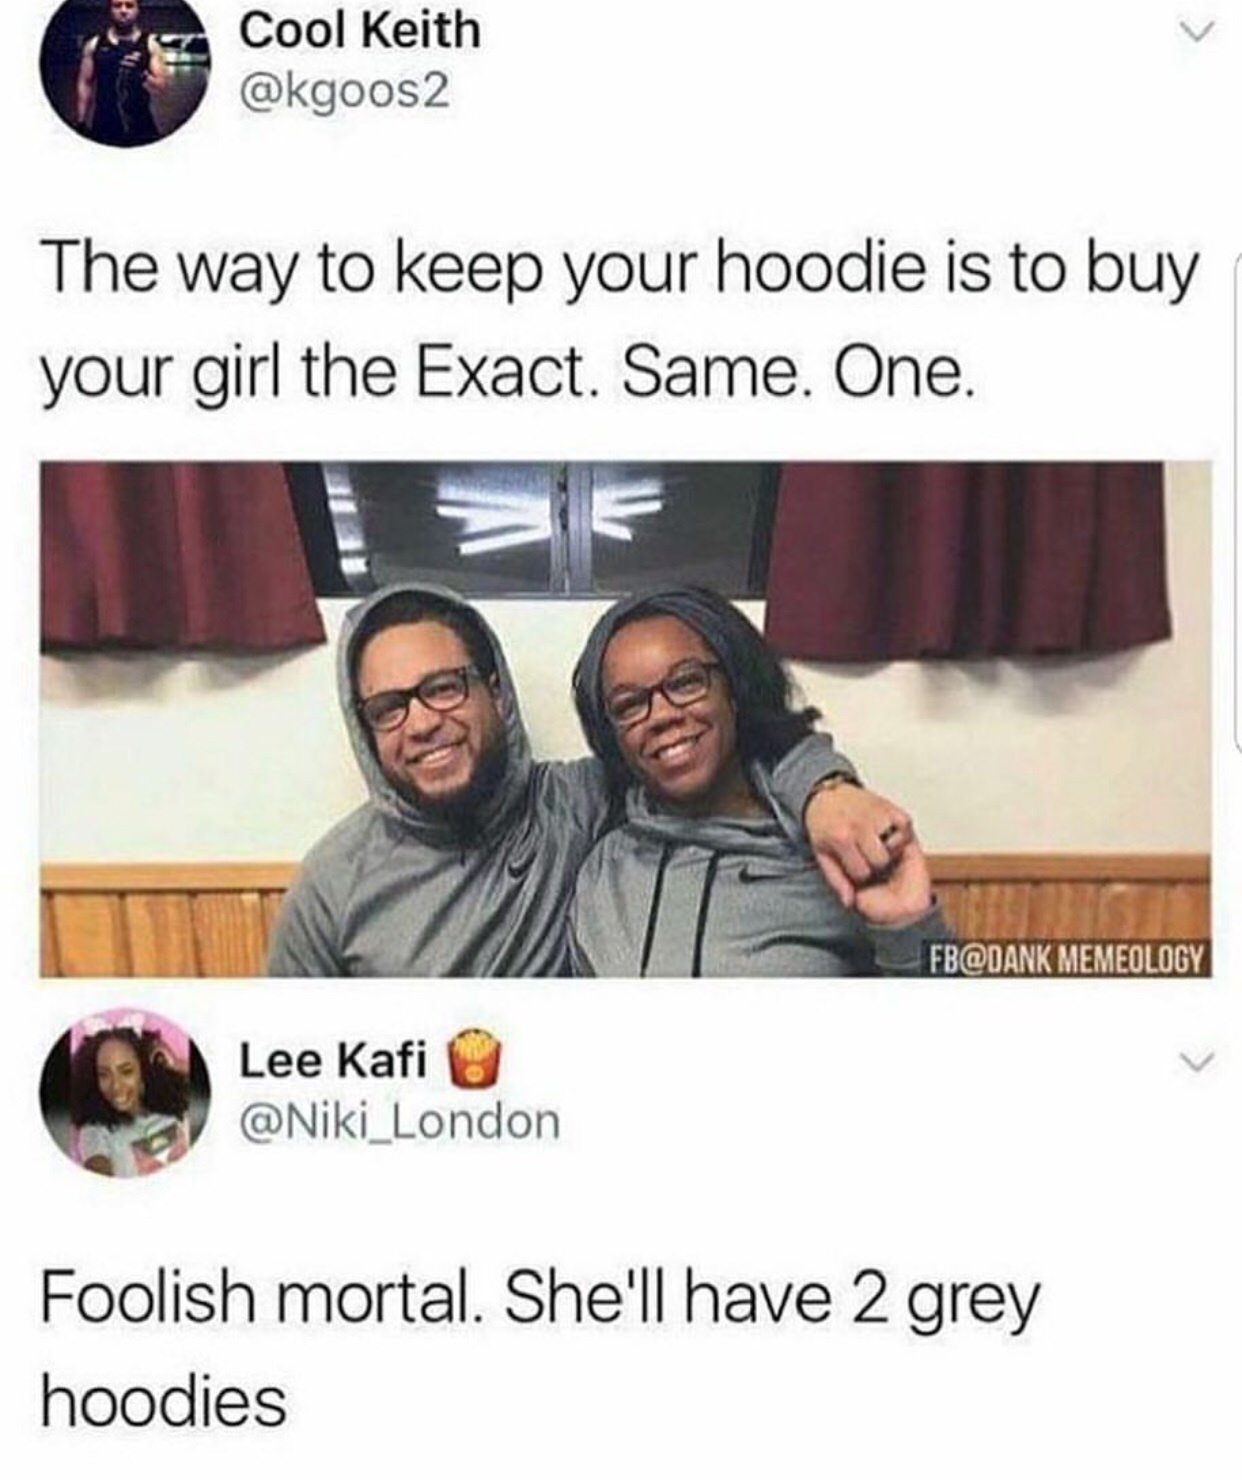 girlfriend hoodie meme - Cool Keith The way to keep your hoodie is to buy your girl the Exact. Same. One. Fb Memeology Lee Kafi Foolish mortal. She'll have 2 grey hoodies